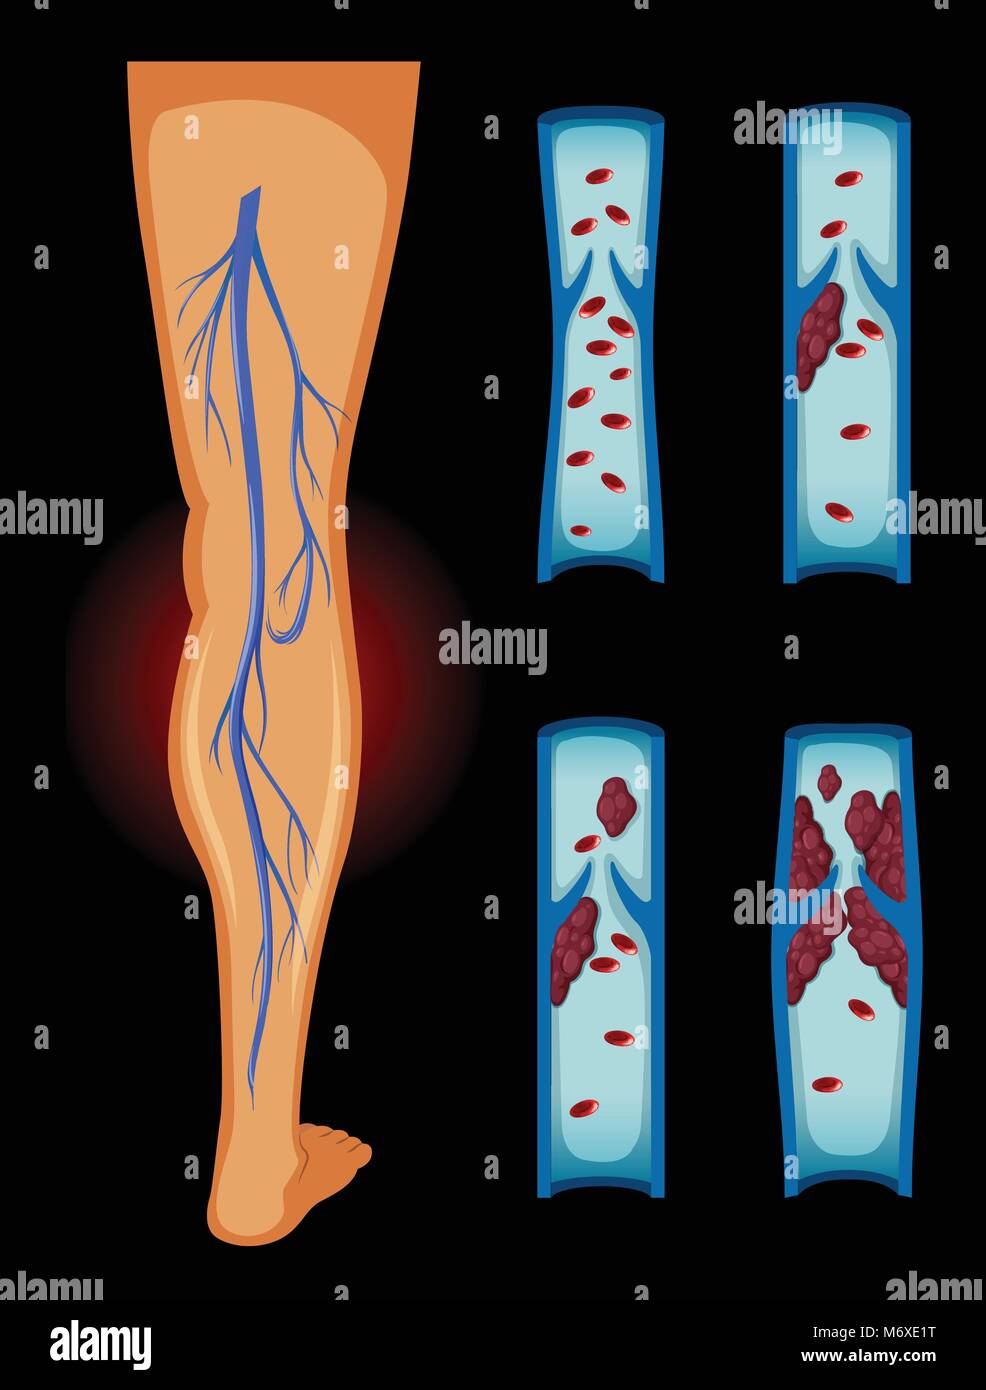 Blood clot in human leg illustration Stock Vector